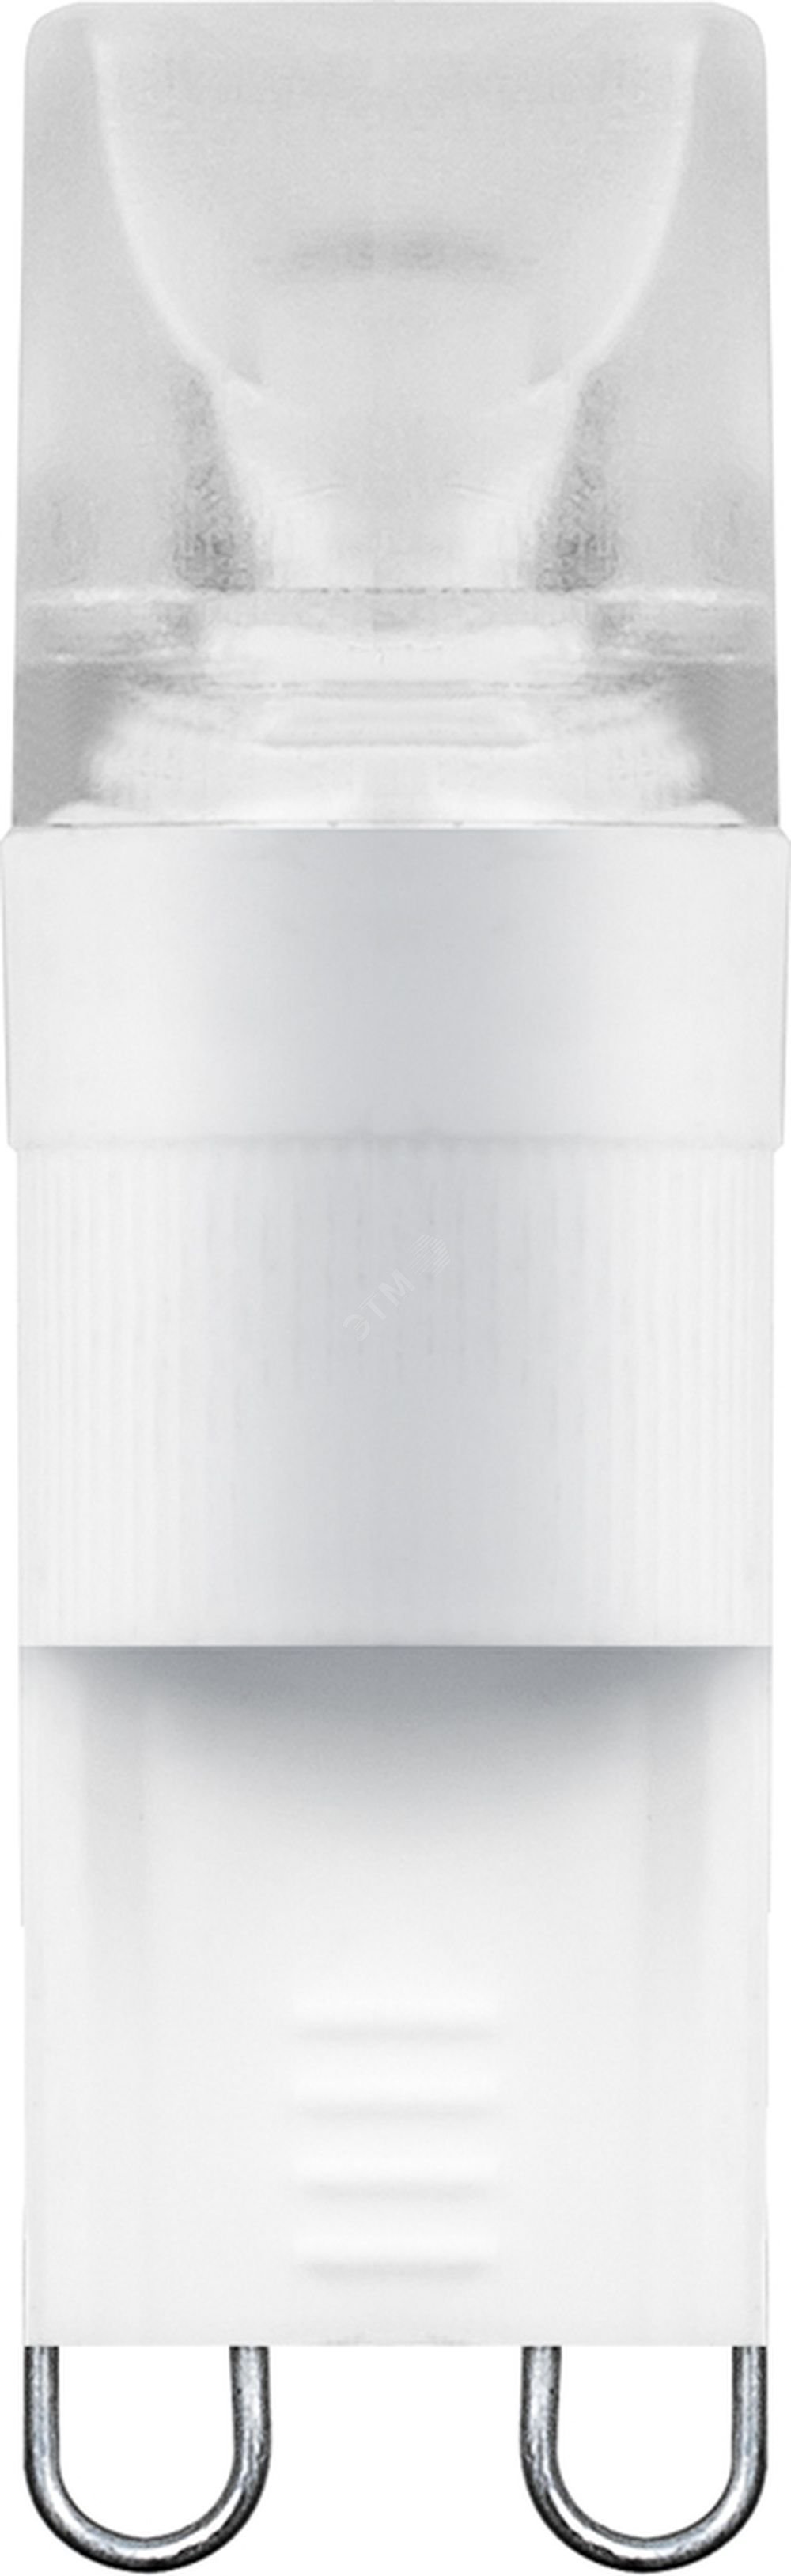 Лампа светодиодная LED 2вт 230в G4 теплая капсульная LB-492 1LED FERON